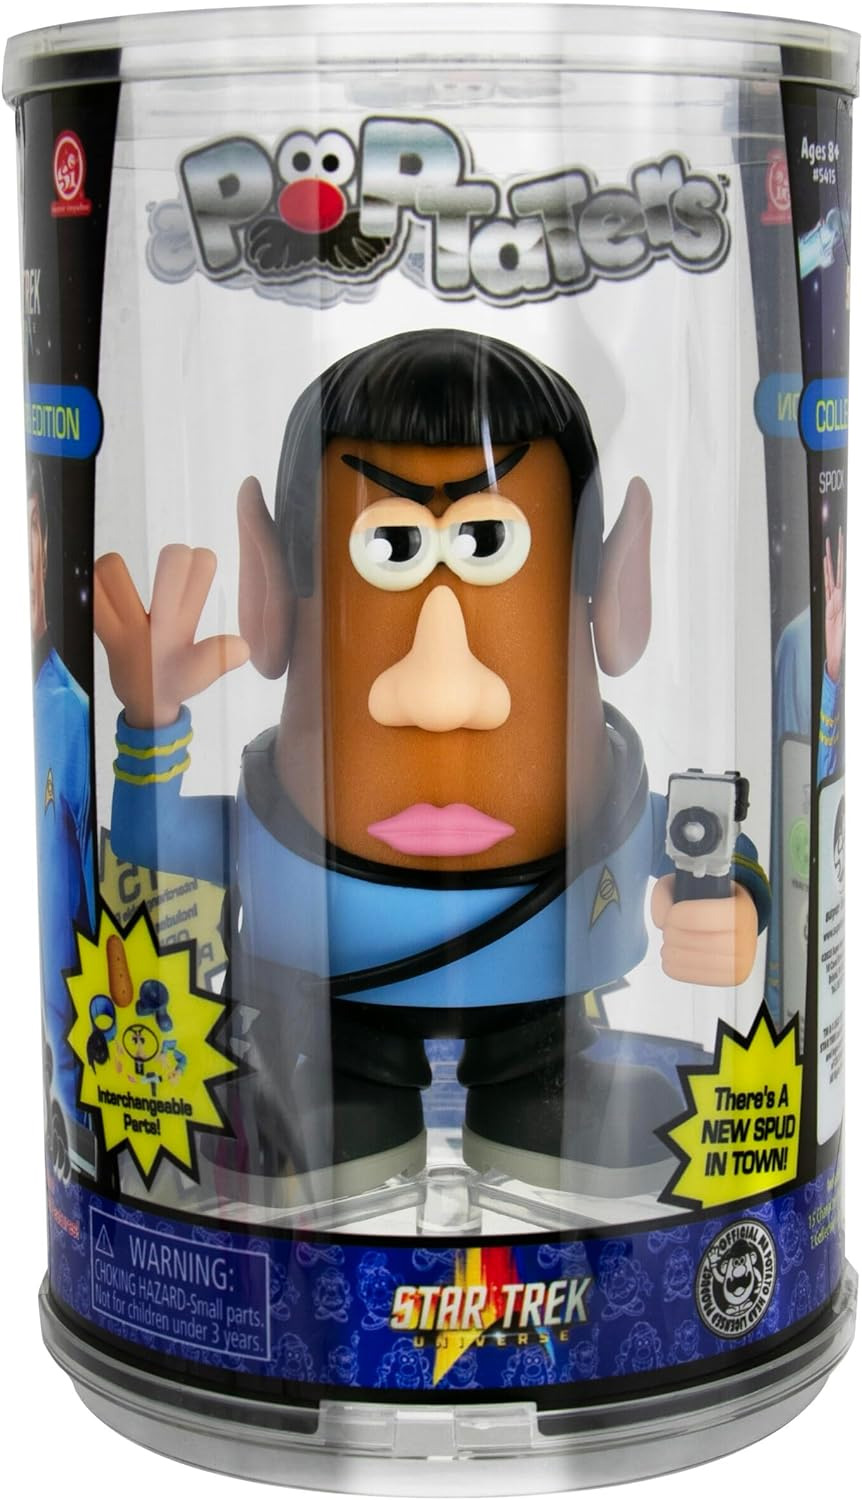 PopTaters Mr. Spock Potato Head Doll (Star Trek TOS)